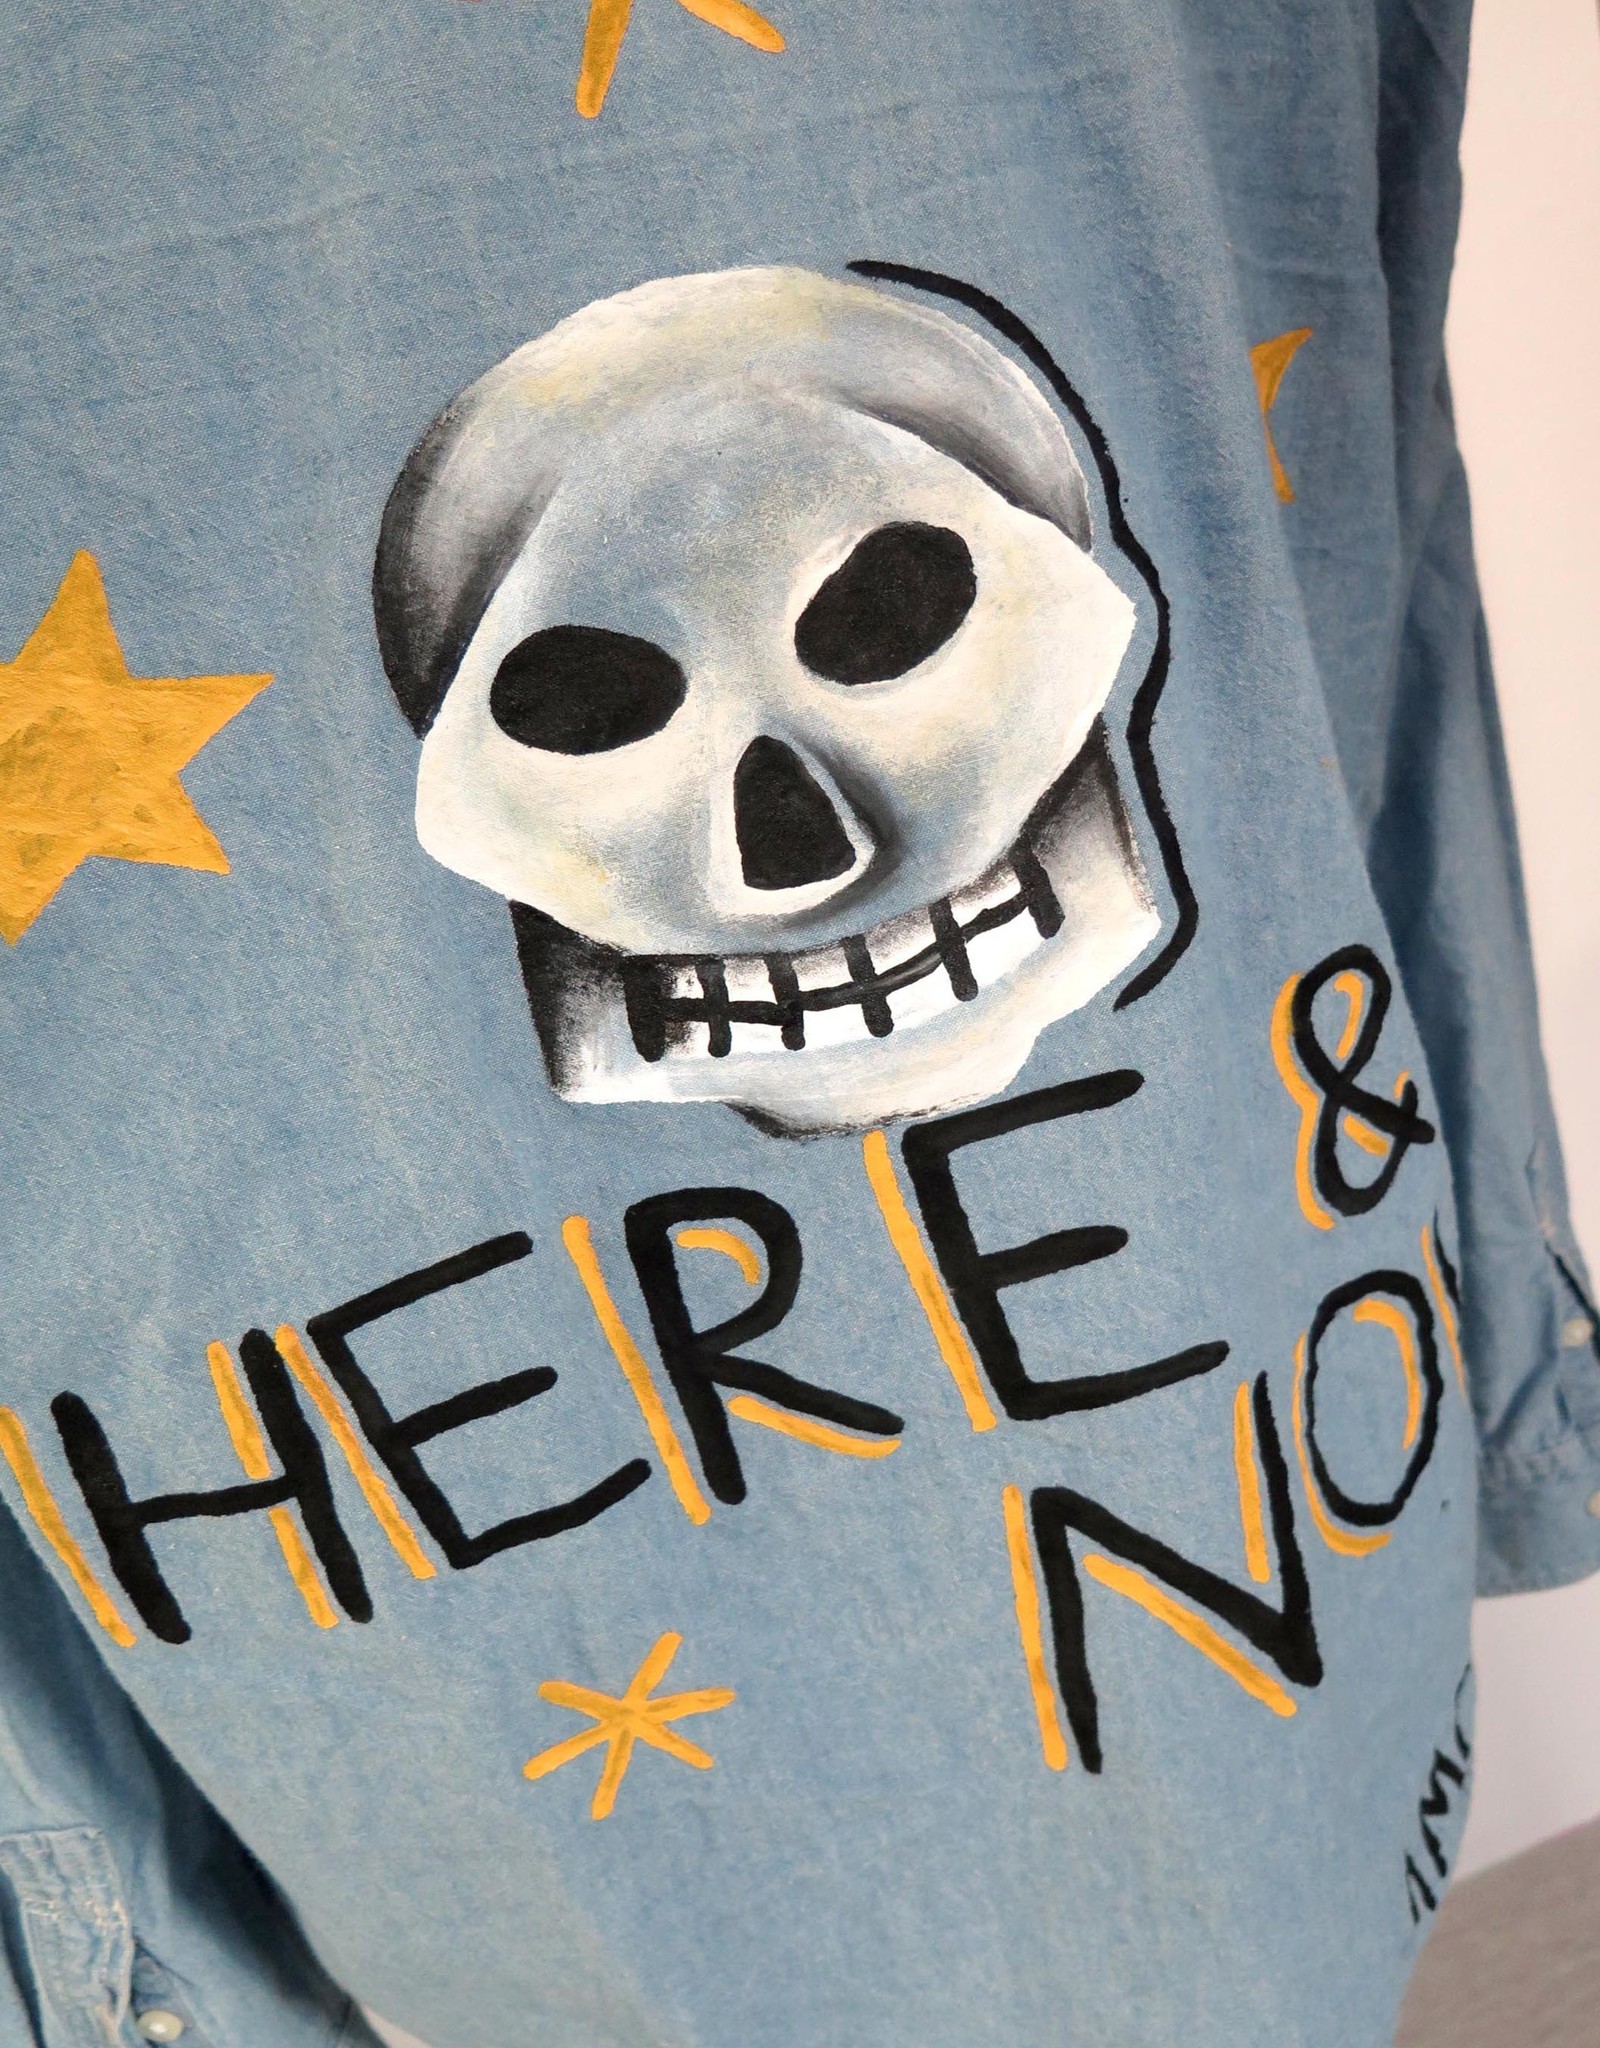 AMCV “Here & Now” textile paint on denim shirt by AMCV